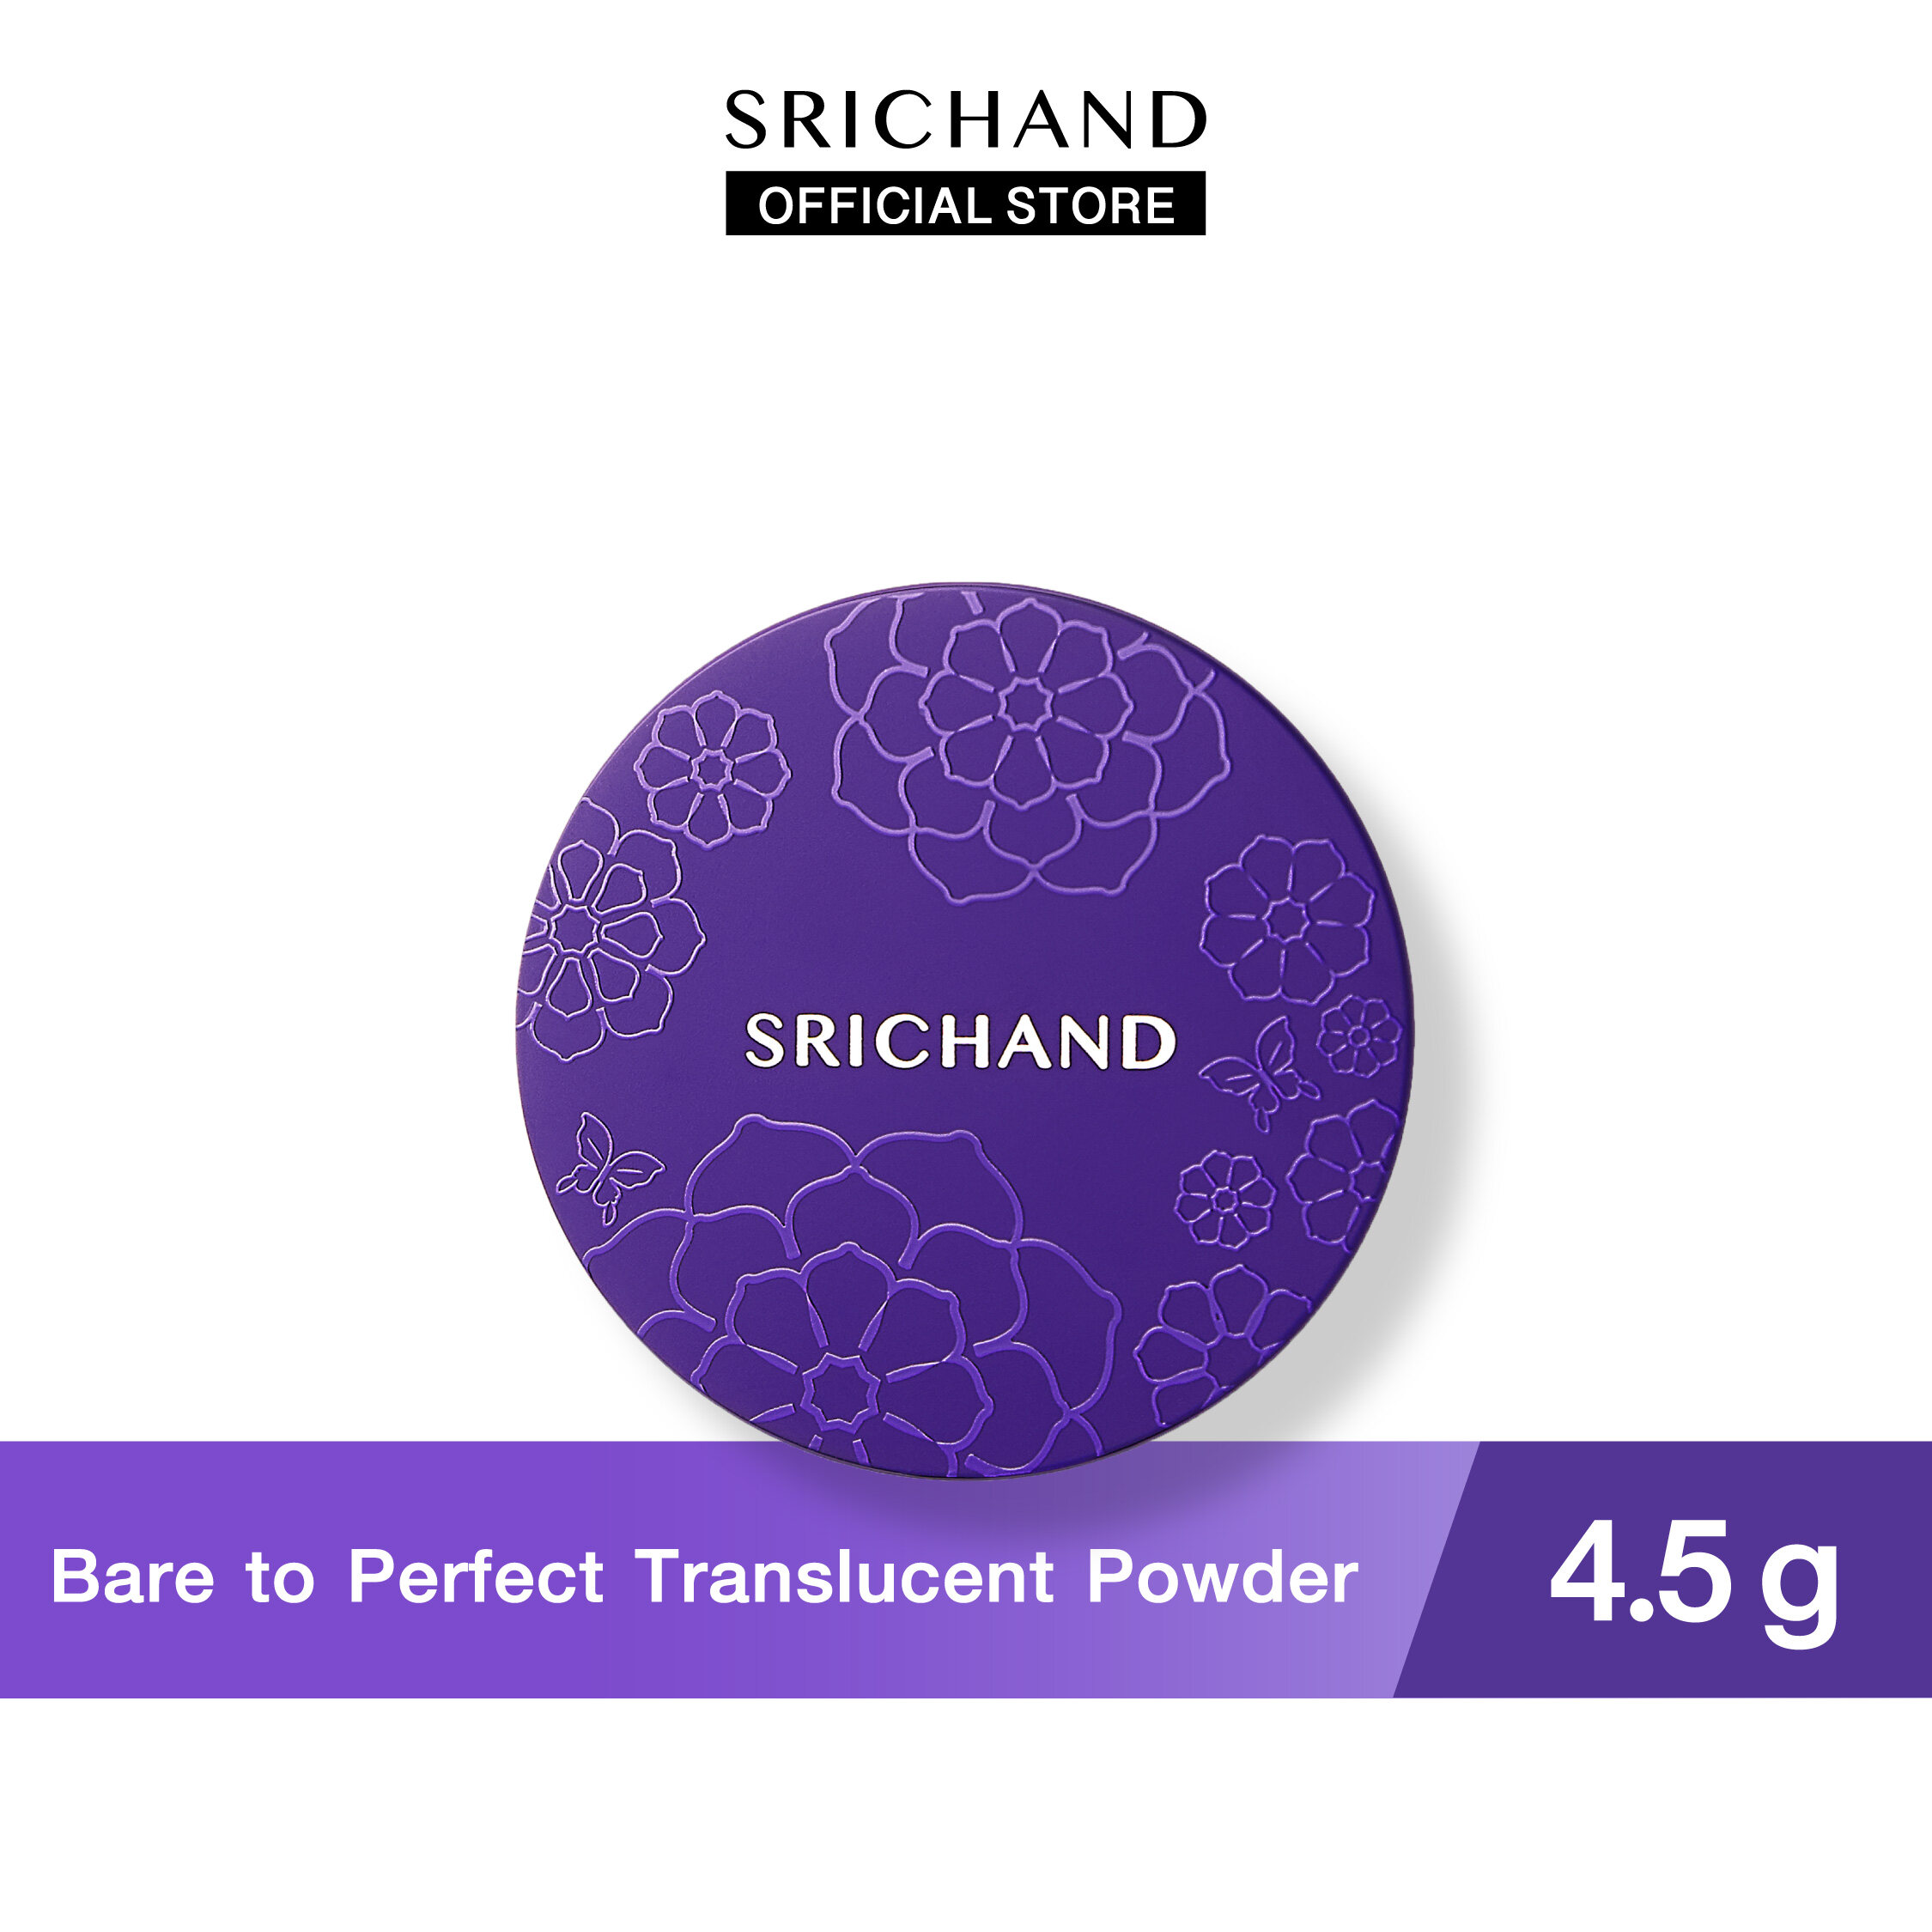 SRICHAND ศรีจันทร์แป้งม่วงเจน 2 แบร์ ทู เพอร์เฟค ทรานส์ลูเซนท์ พาวเดอร์ (4.5 กรัม) Bare to Perfect Translucent Powder (4.5g.)